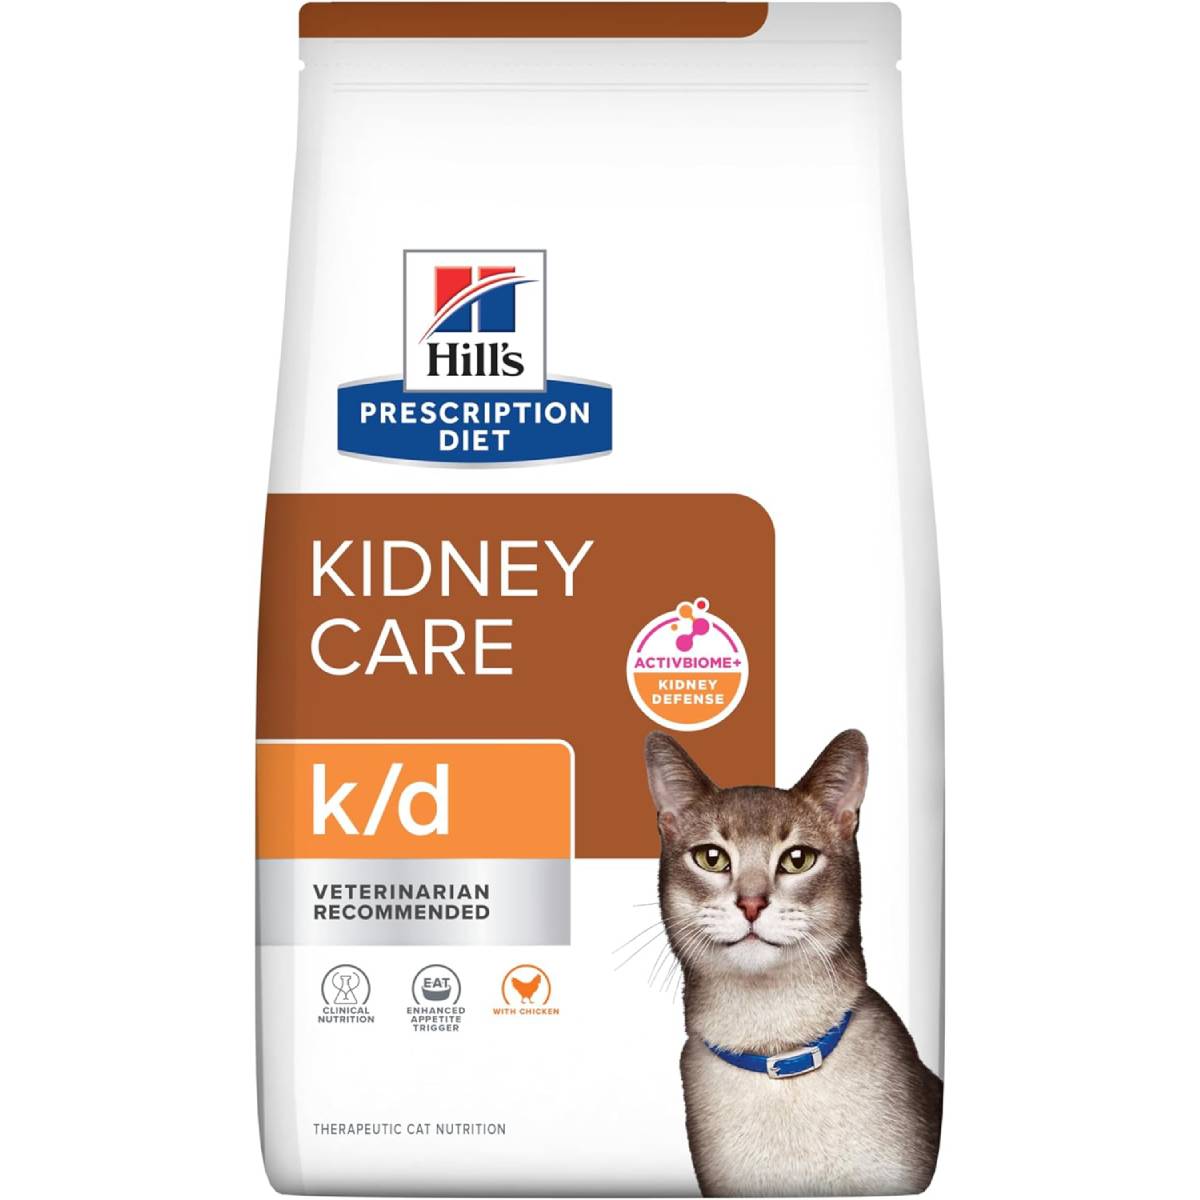 Hill’s Prescription Diet Kidney Care Cat Food